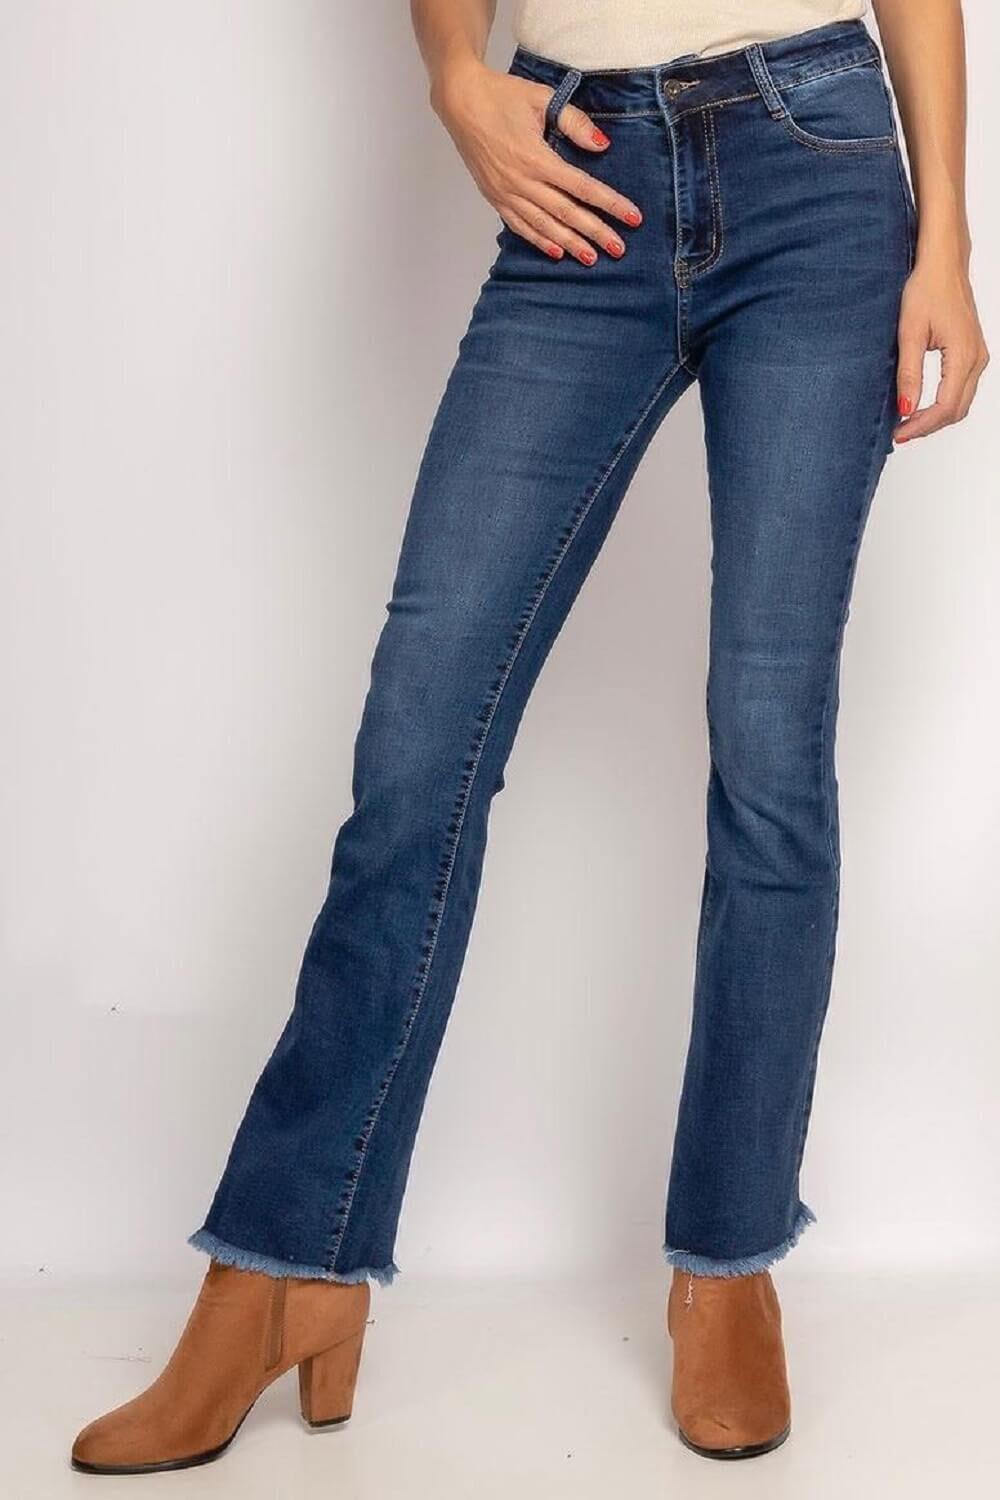 denim-flare-jeans